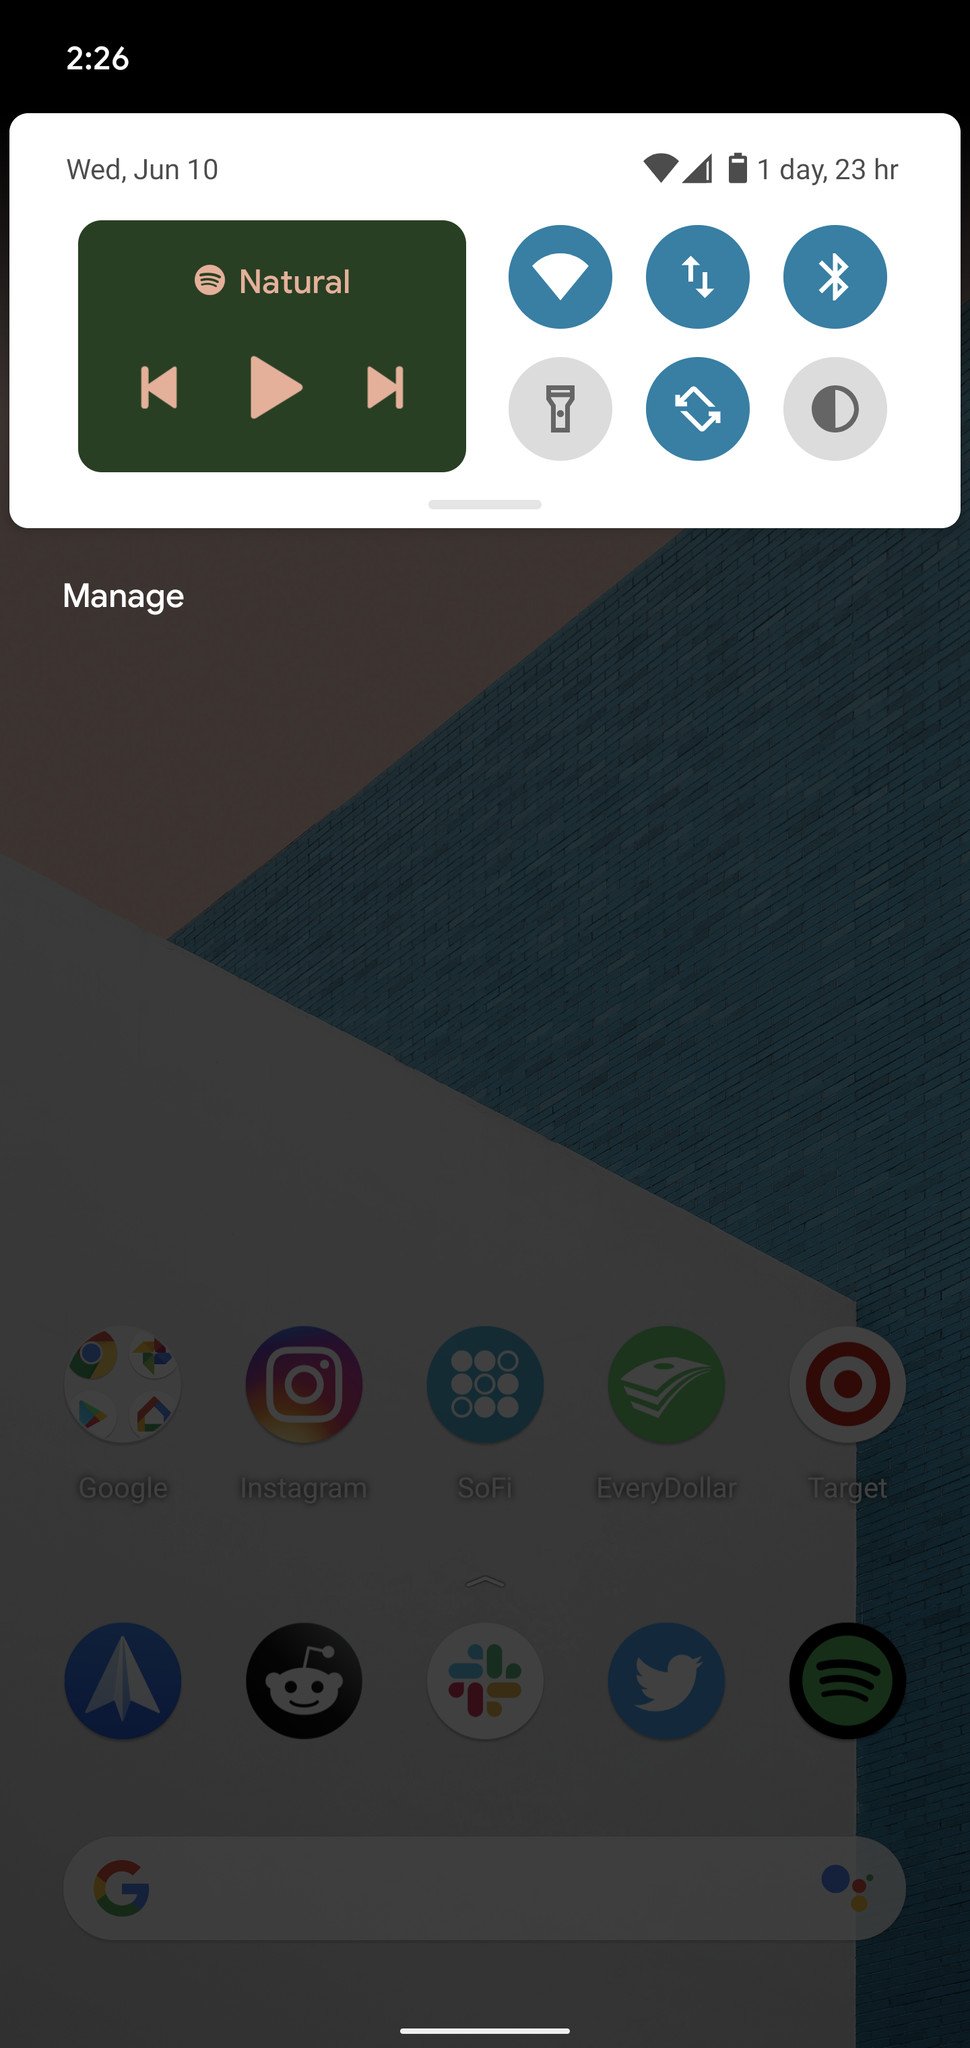 Android 11 media controls